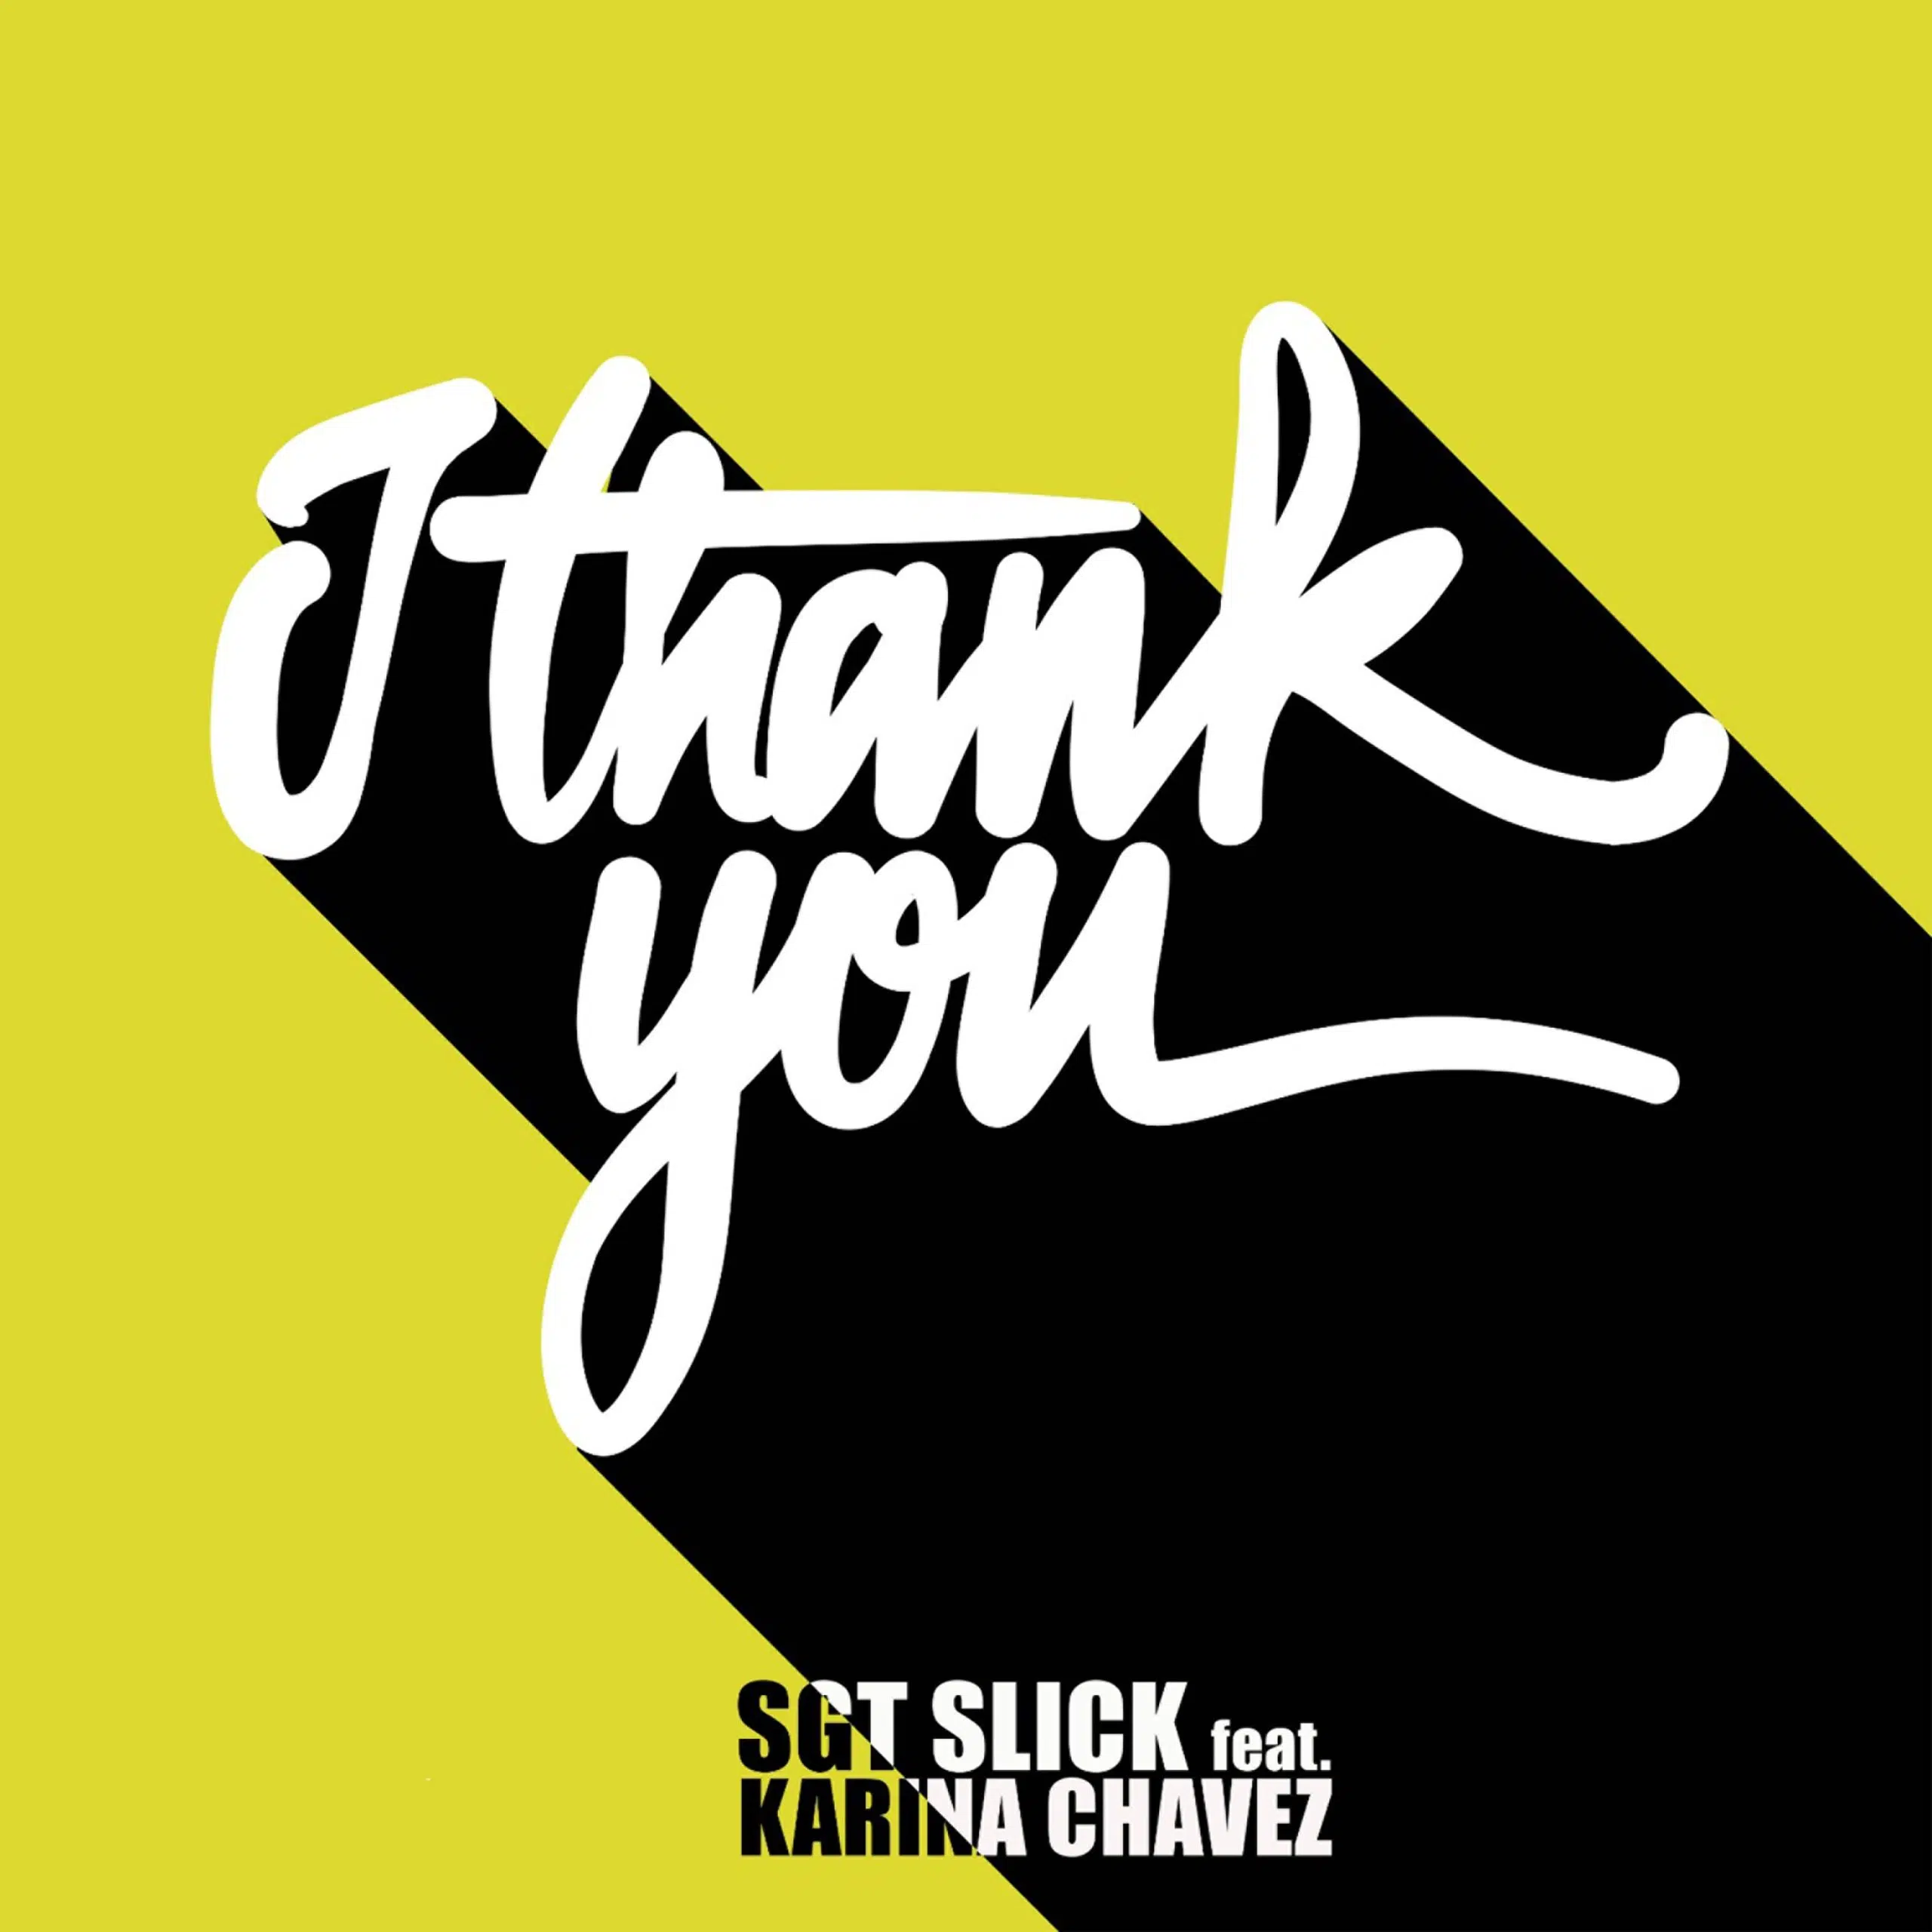 Sgt Slick, Karina Chavez “I Thank You” (Michael Gray Remix)